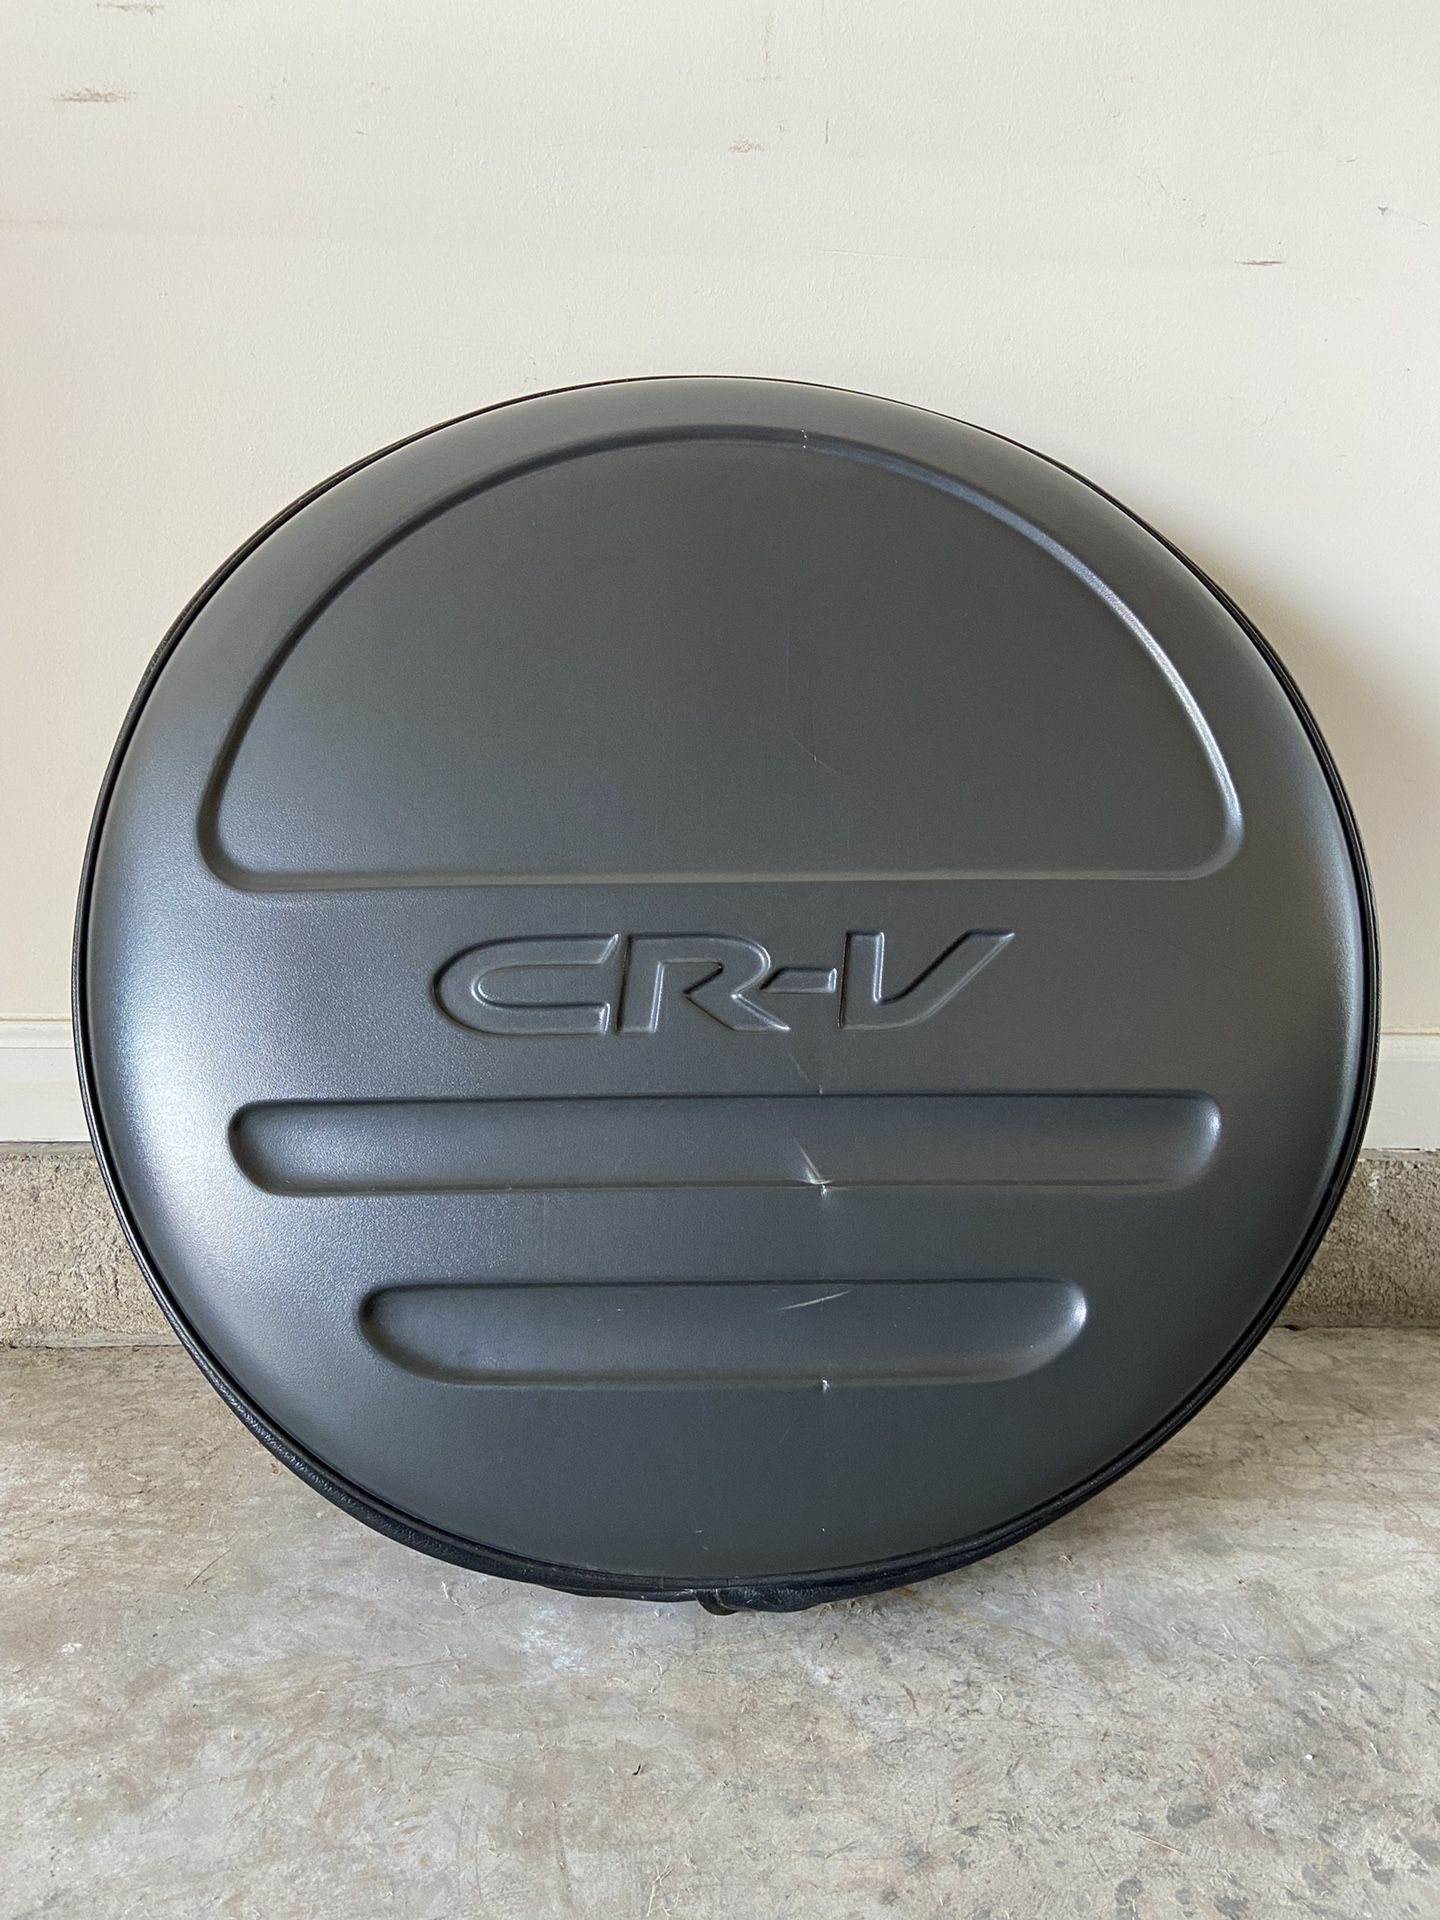 Honda CRV Spare Tire Cover